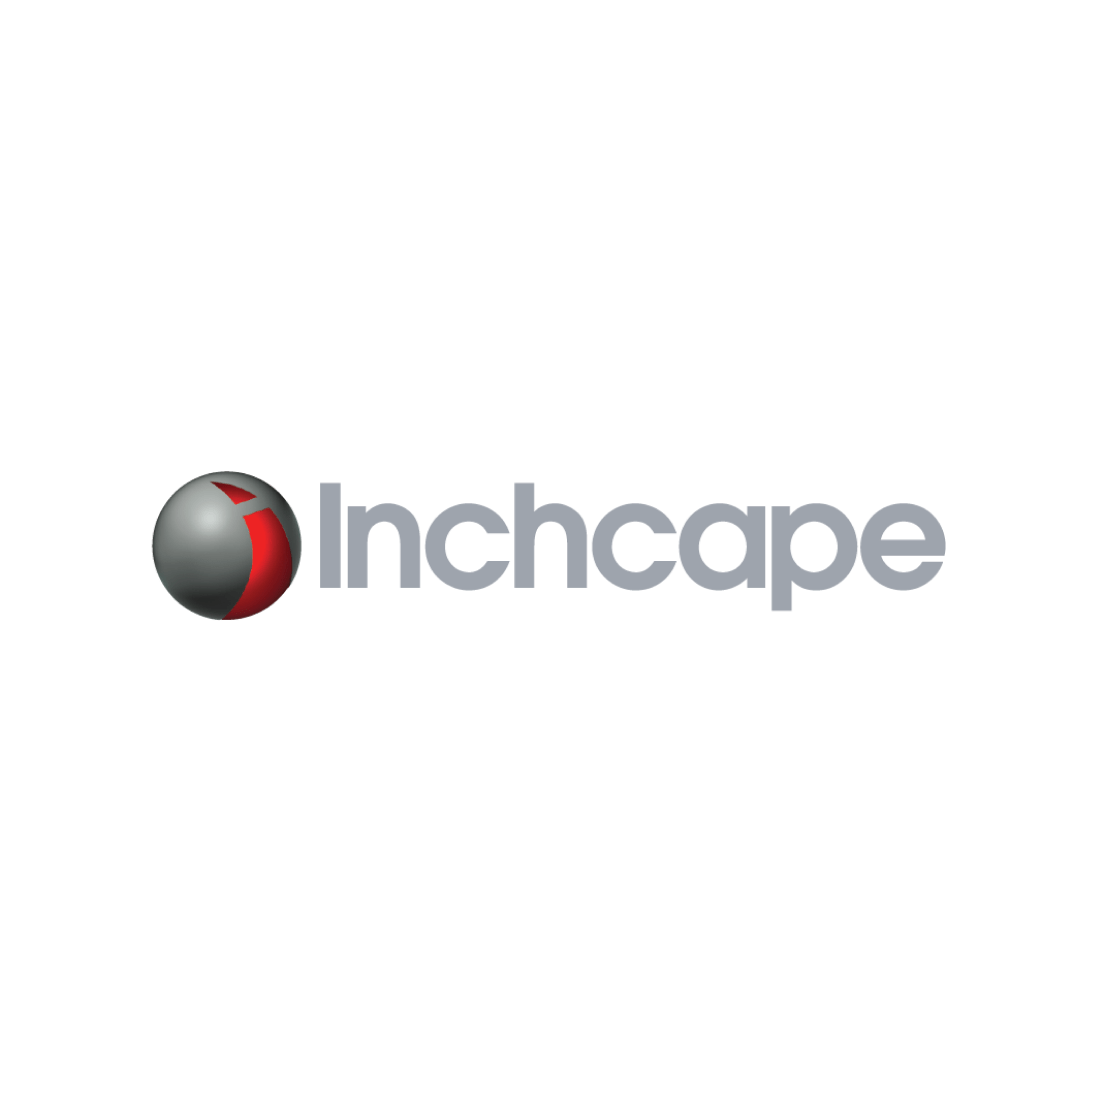 Inchcape